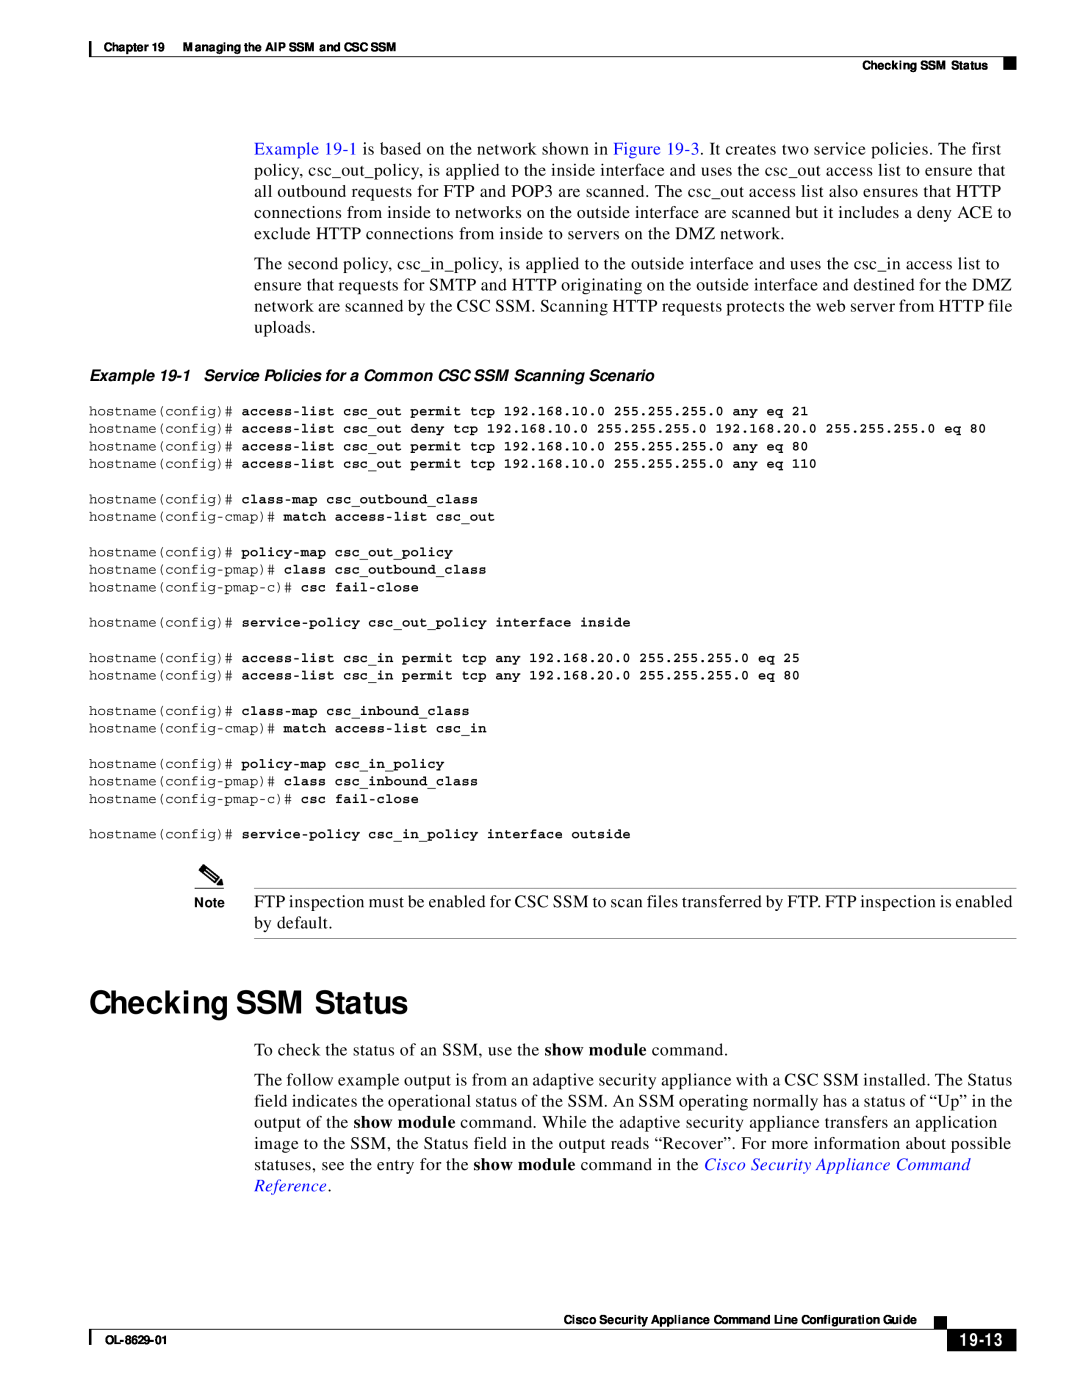 Cisco Systems ASA 5500 manual Checking SSM Status, 19-13, Managing the AIP SSM and CSC SSM, OL-8629-01 